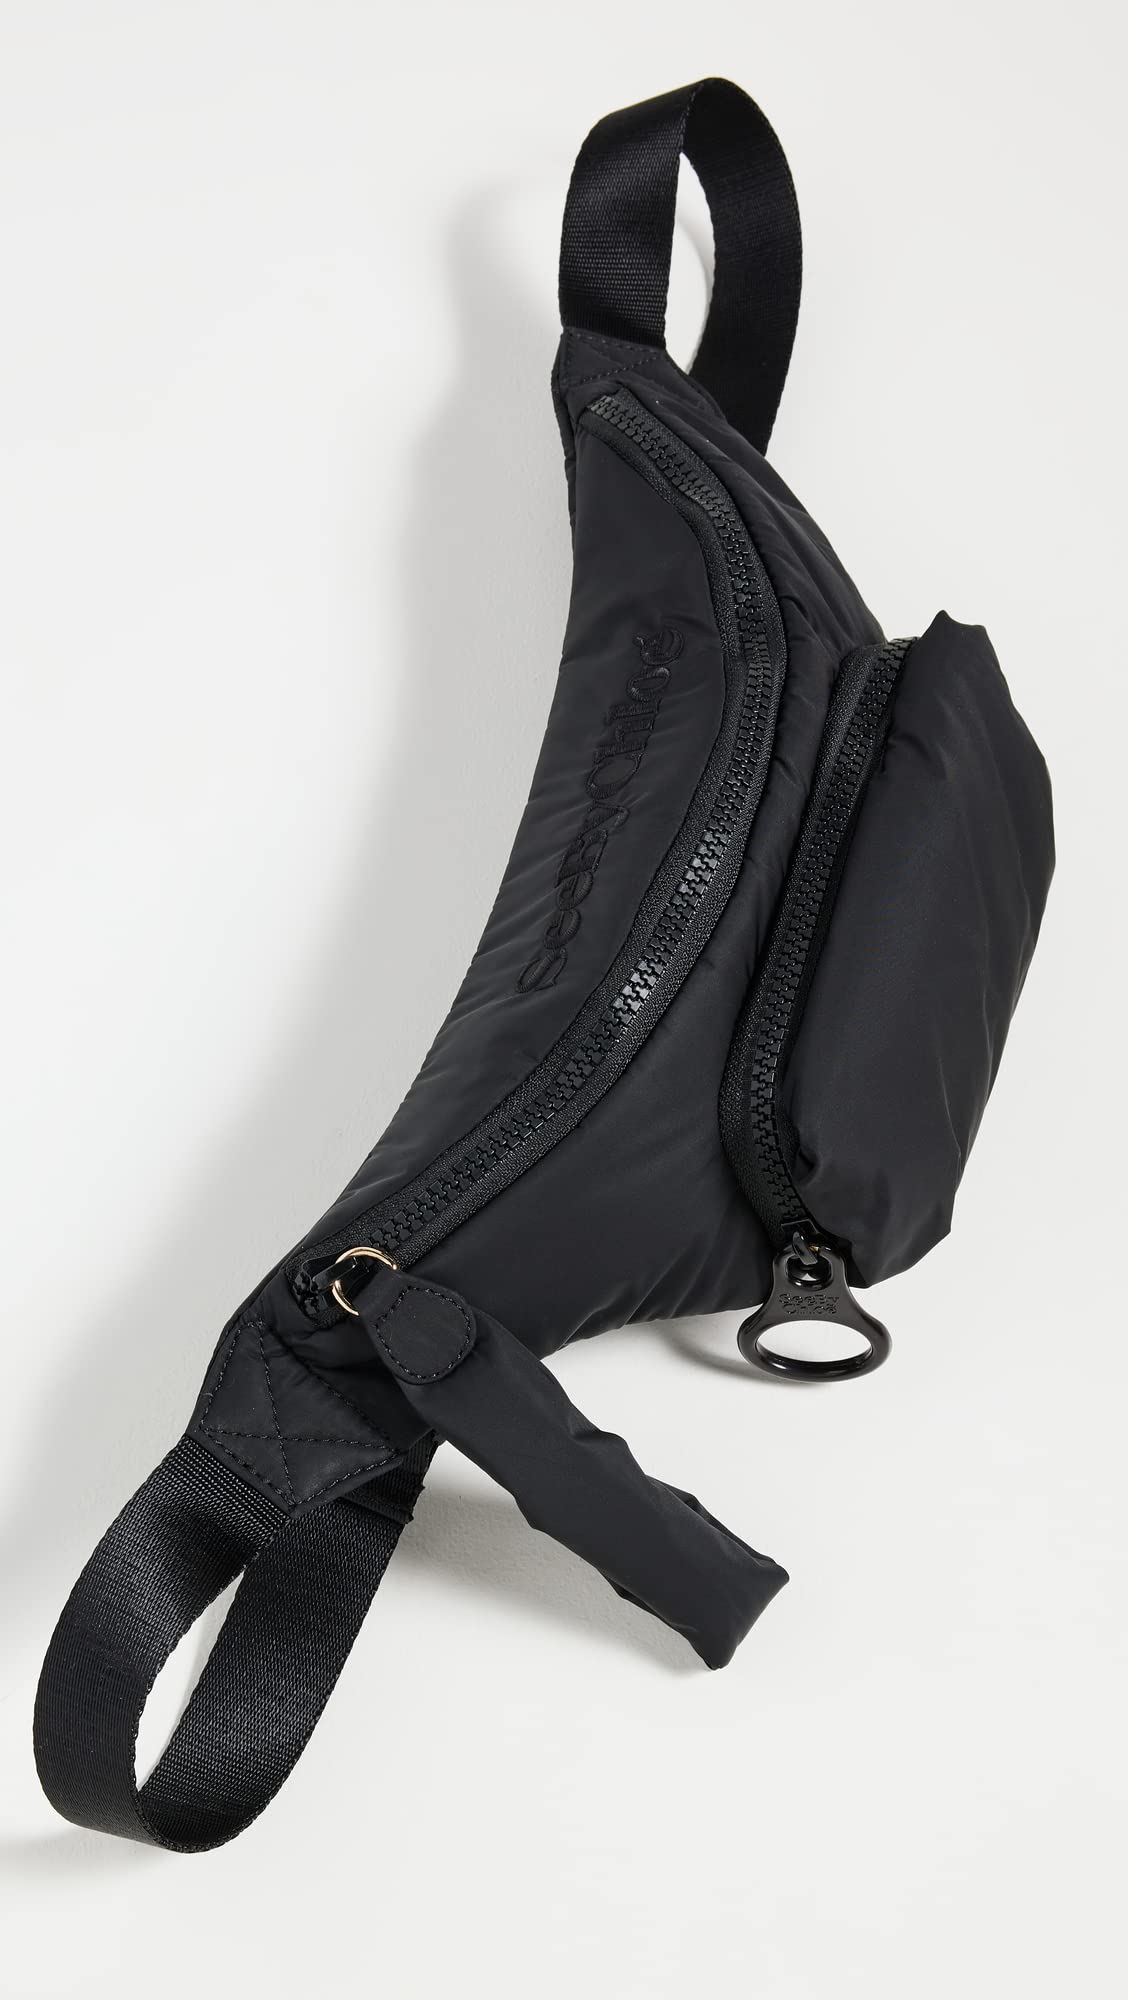 See by Chloe Women's Joy Rider Belt Bag, Black, One Size